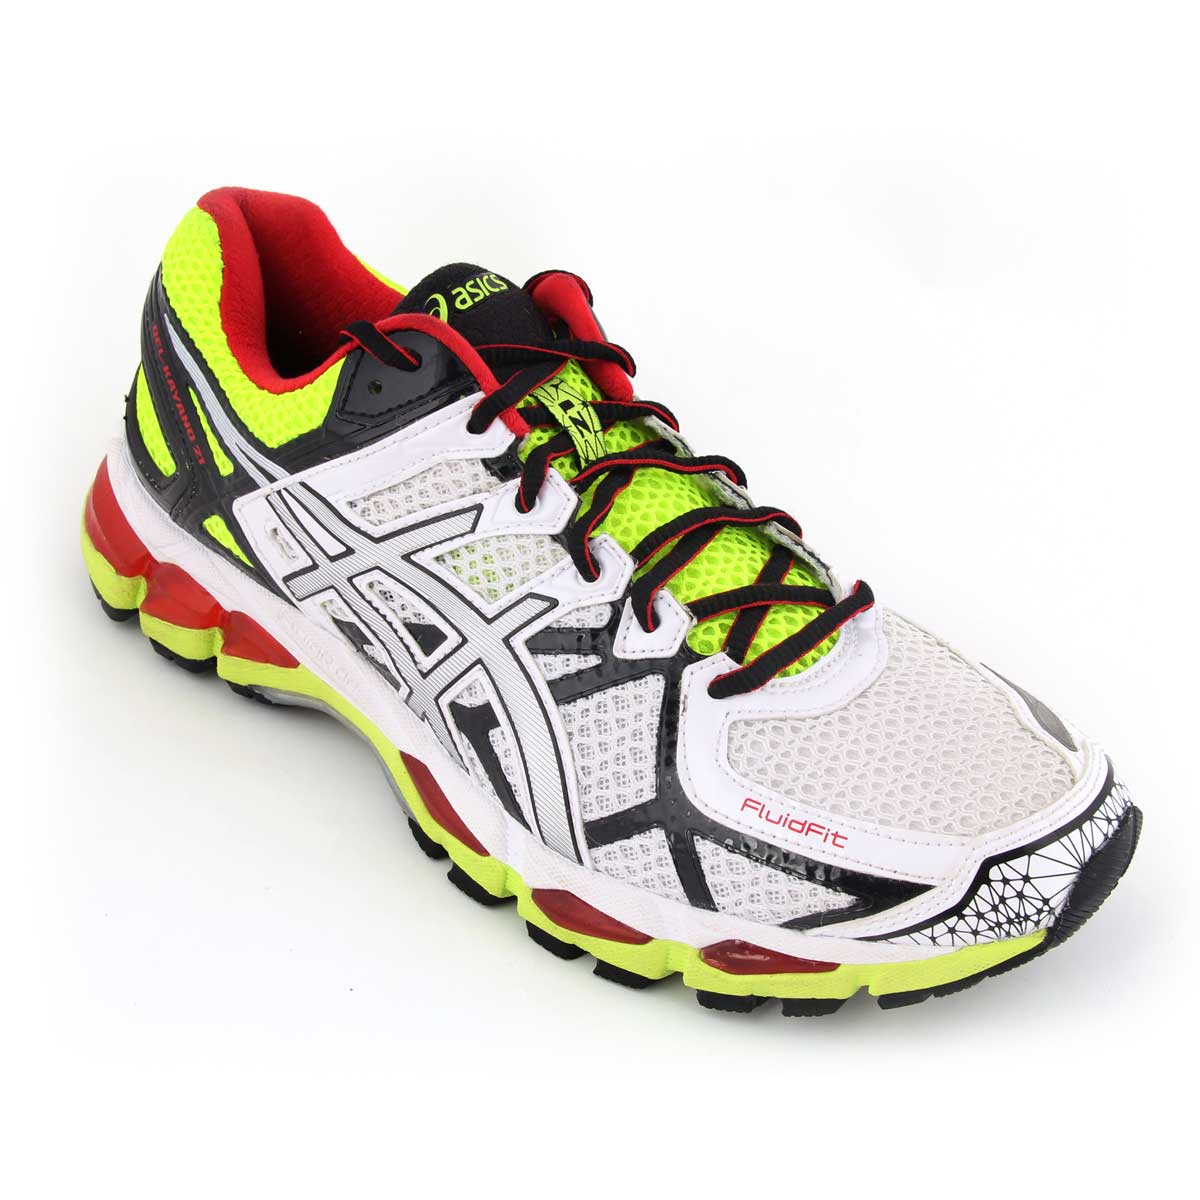 Buy Asics Gel-Kayano 21 Men's Running Shoes (Lightning) Online